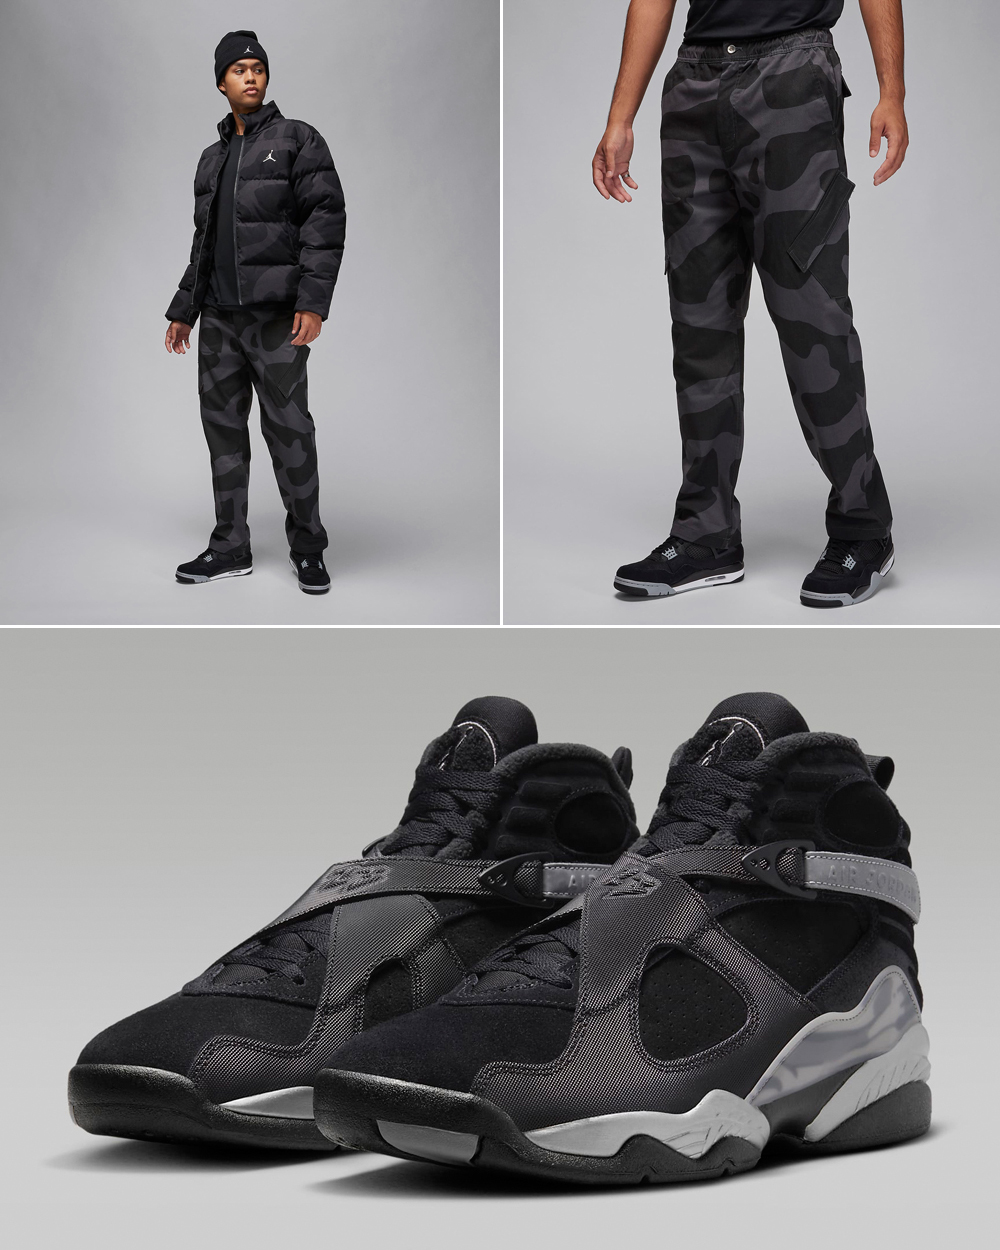 Air-Jordan-8-Winterized-Gunsmoke-Jacket-Pants-Outfit